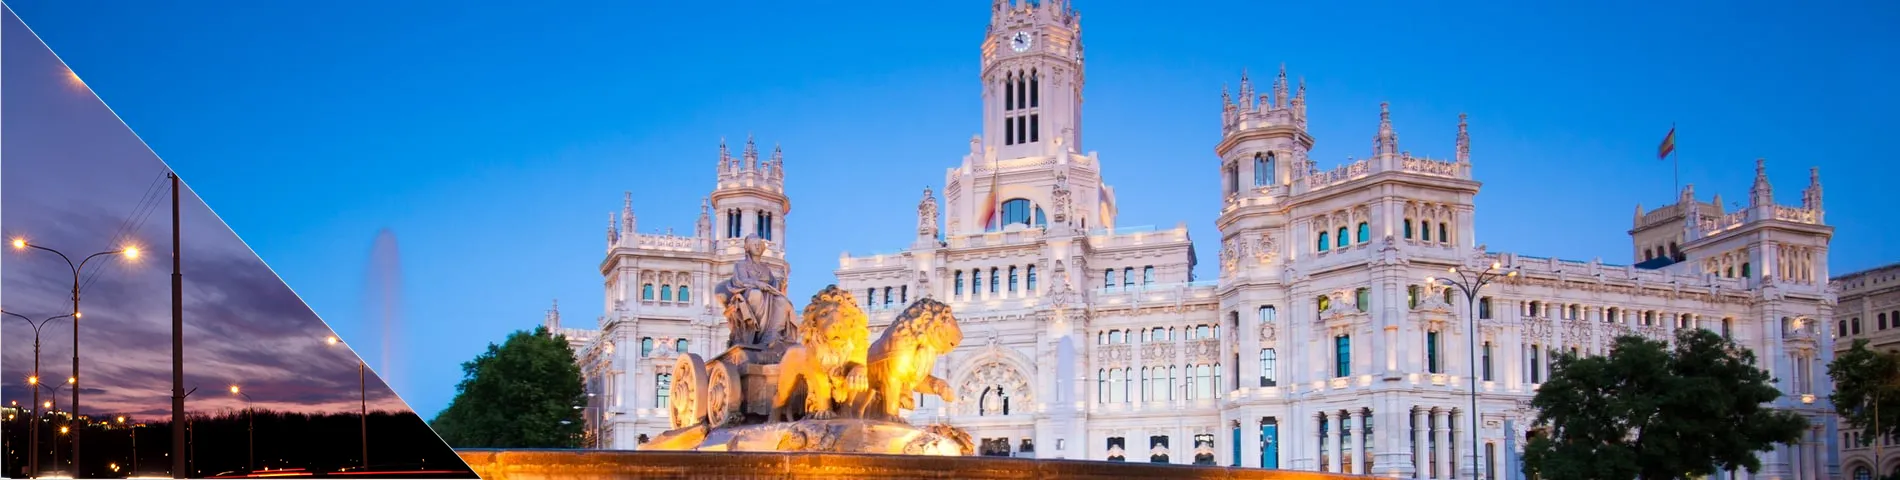 Madrid - Abend